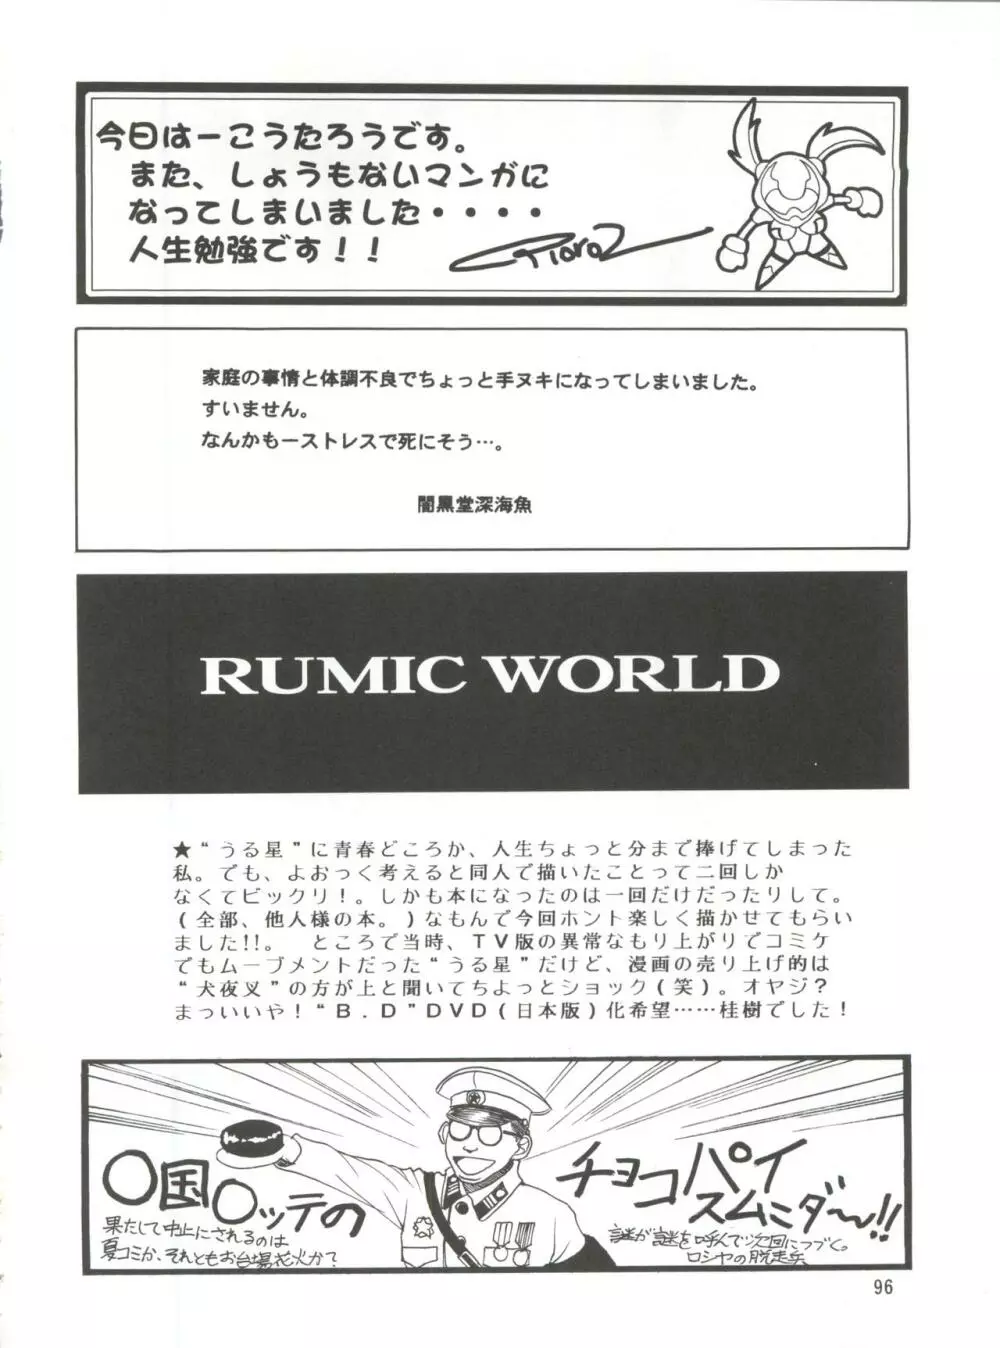 NEXT Climax Magazine 7 – RUMIC WORLD 96ページ